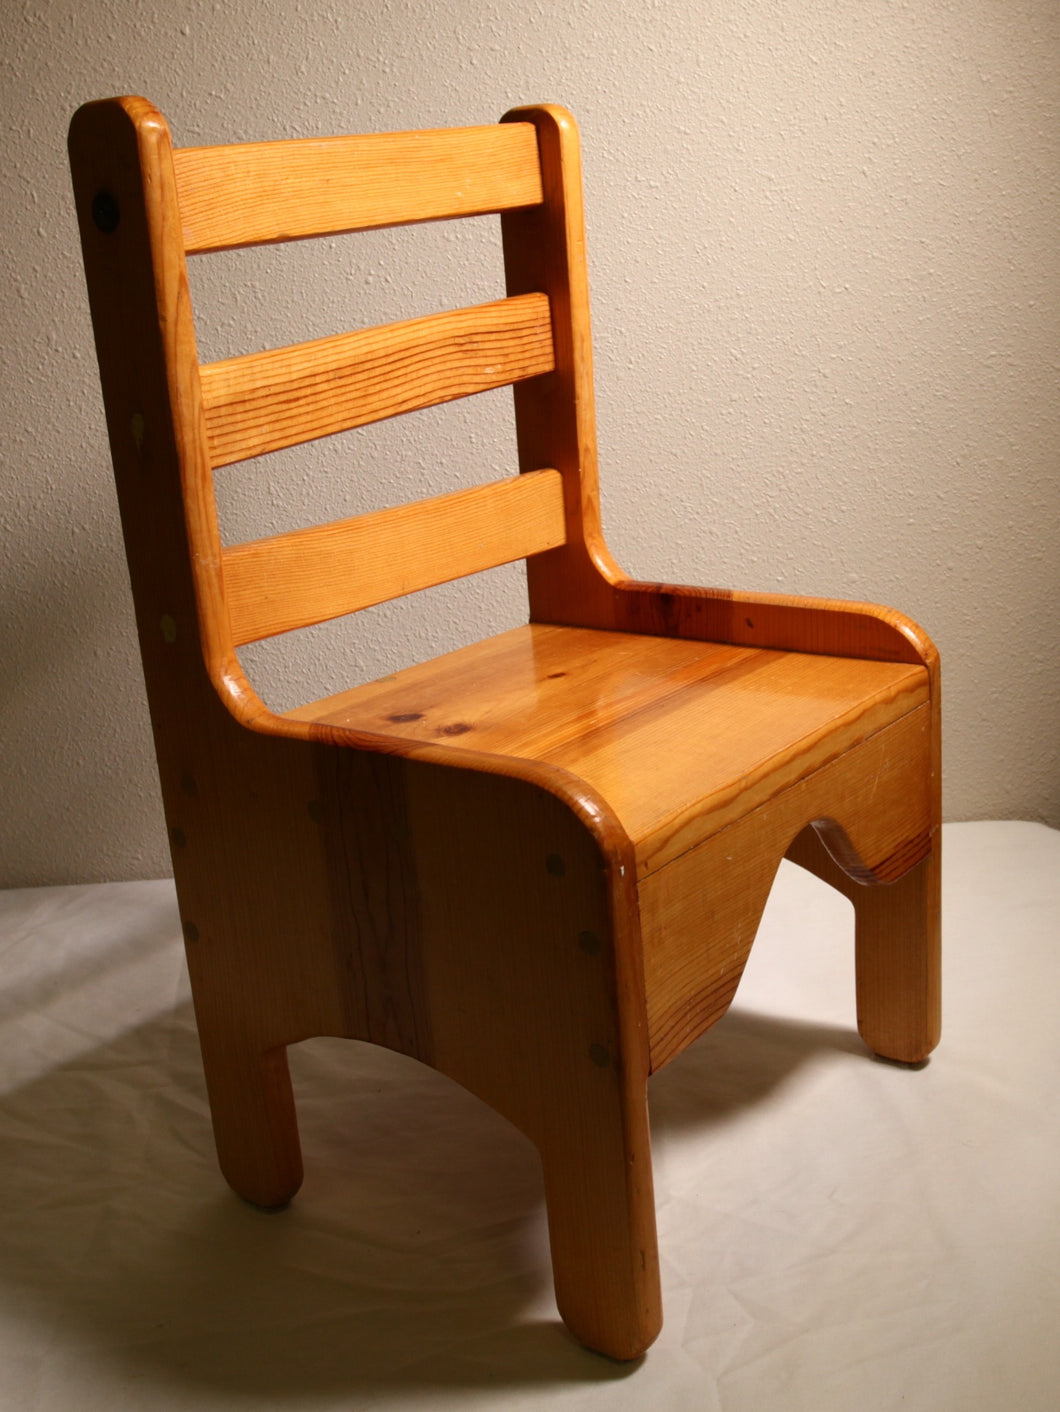 Wooden Chair #11: 9.5